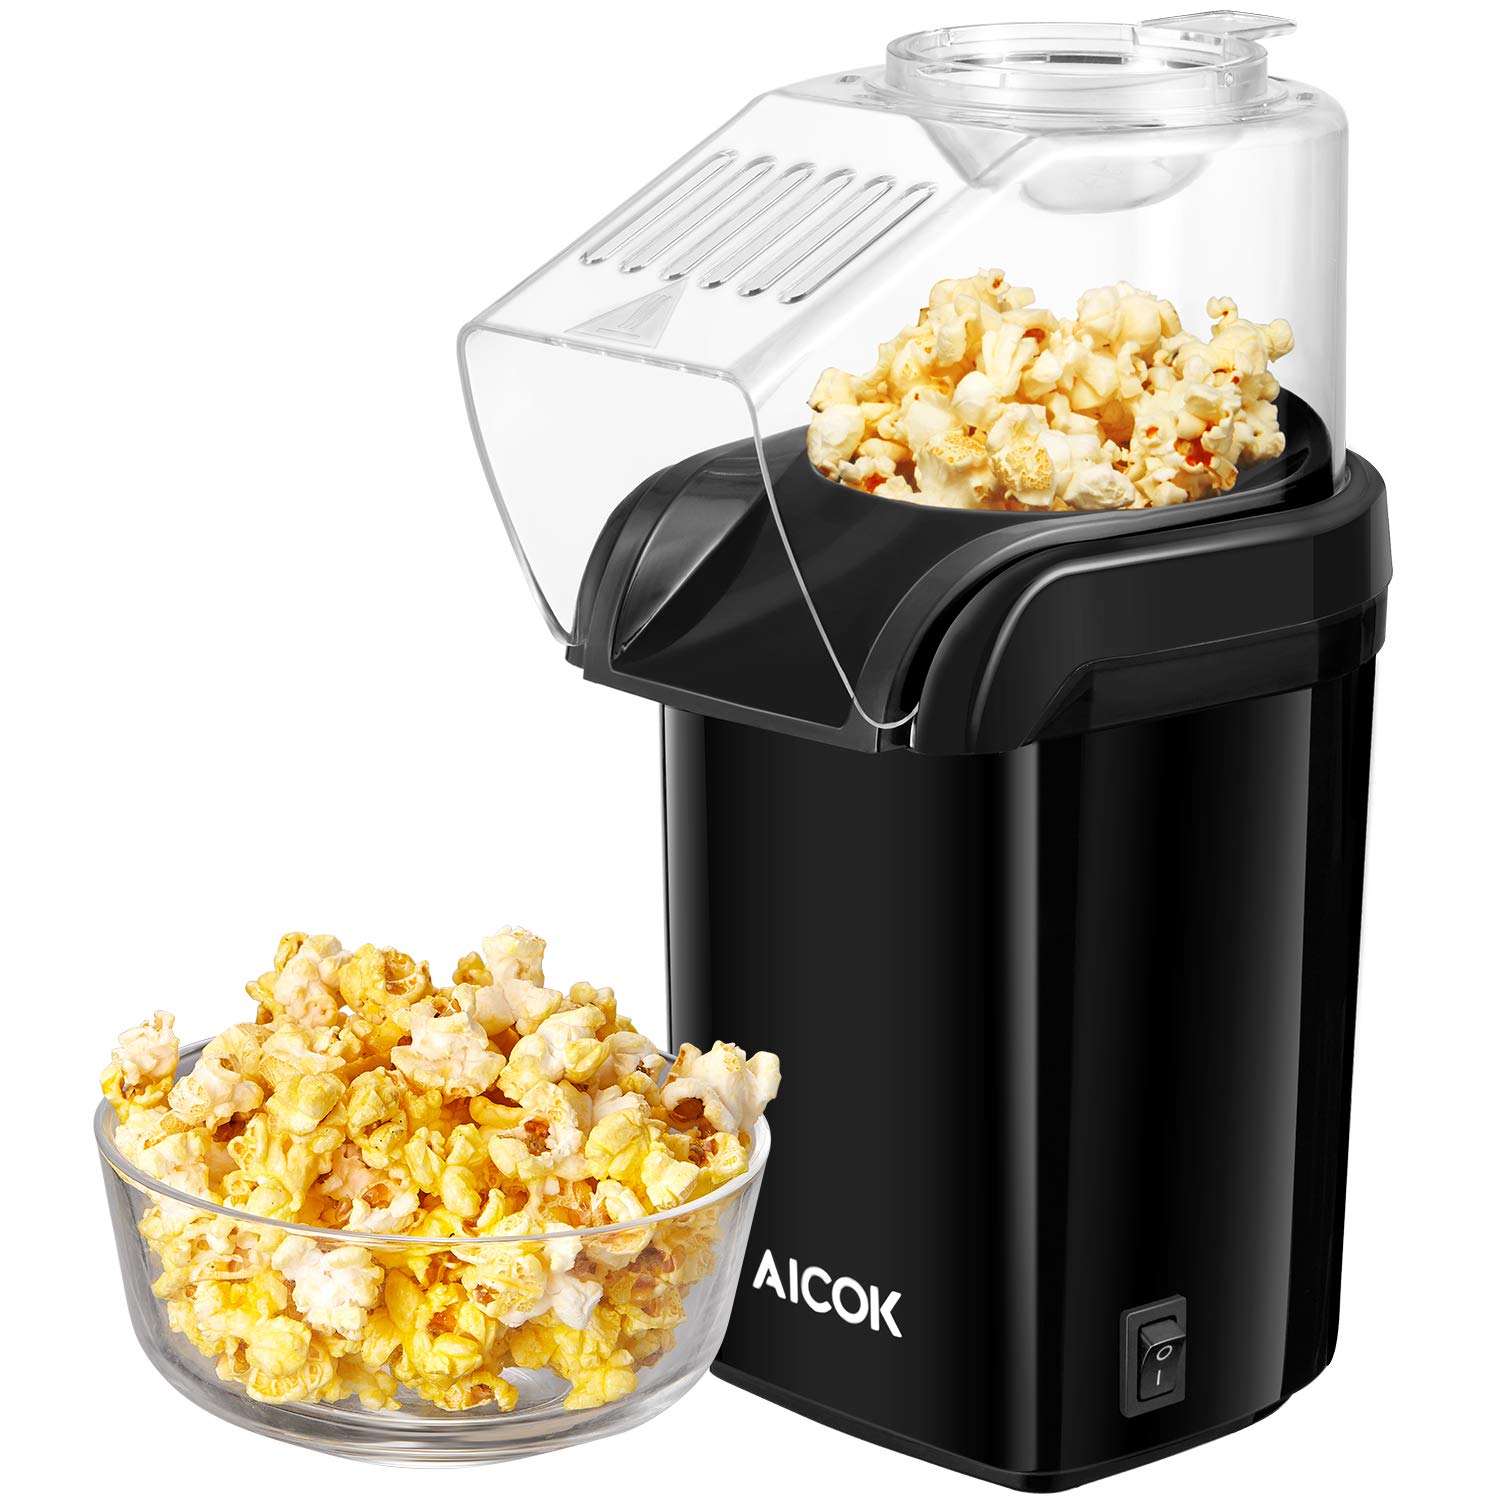  Hot Air Popcorn Popper (Amazon) 